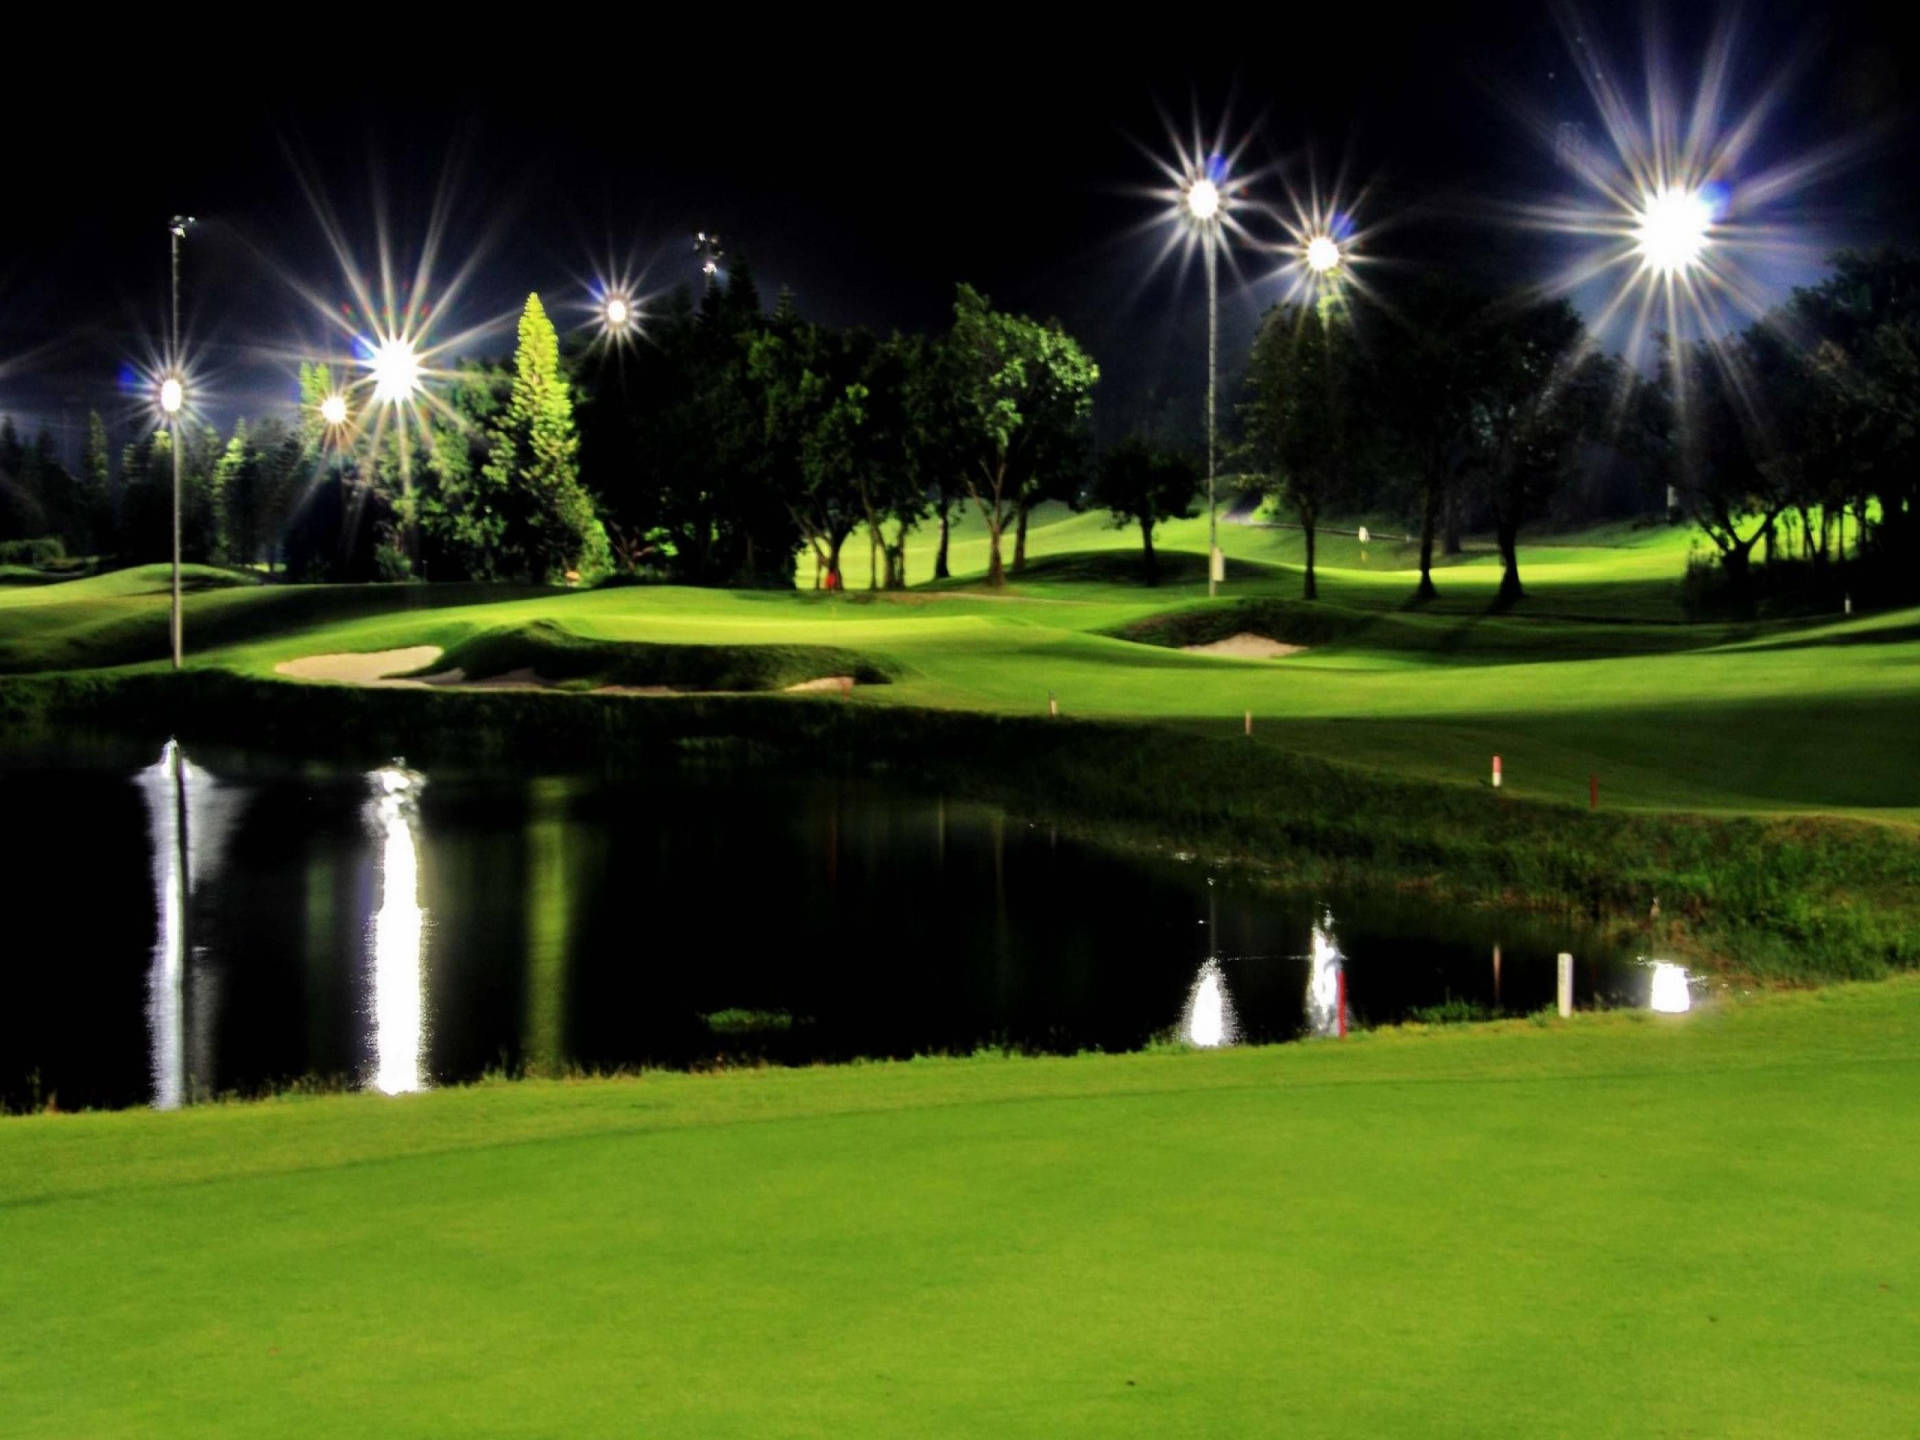 Golf In The Night